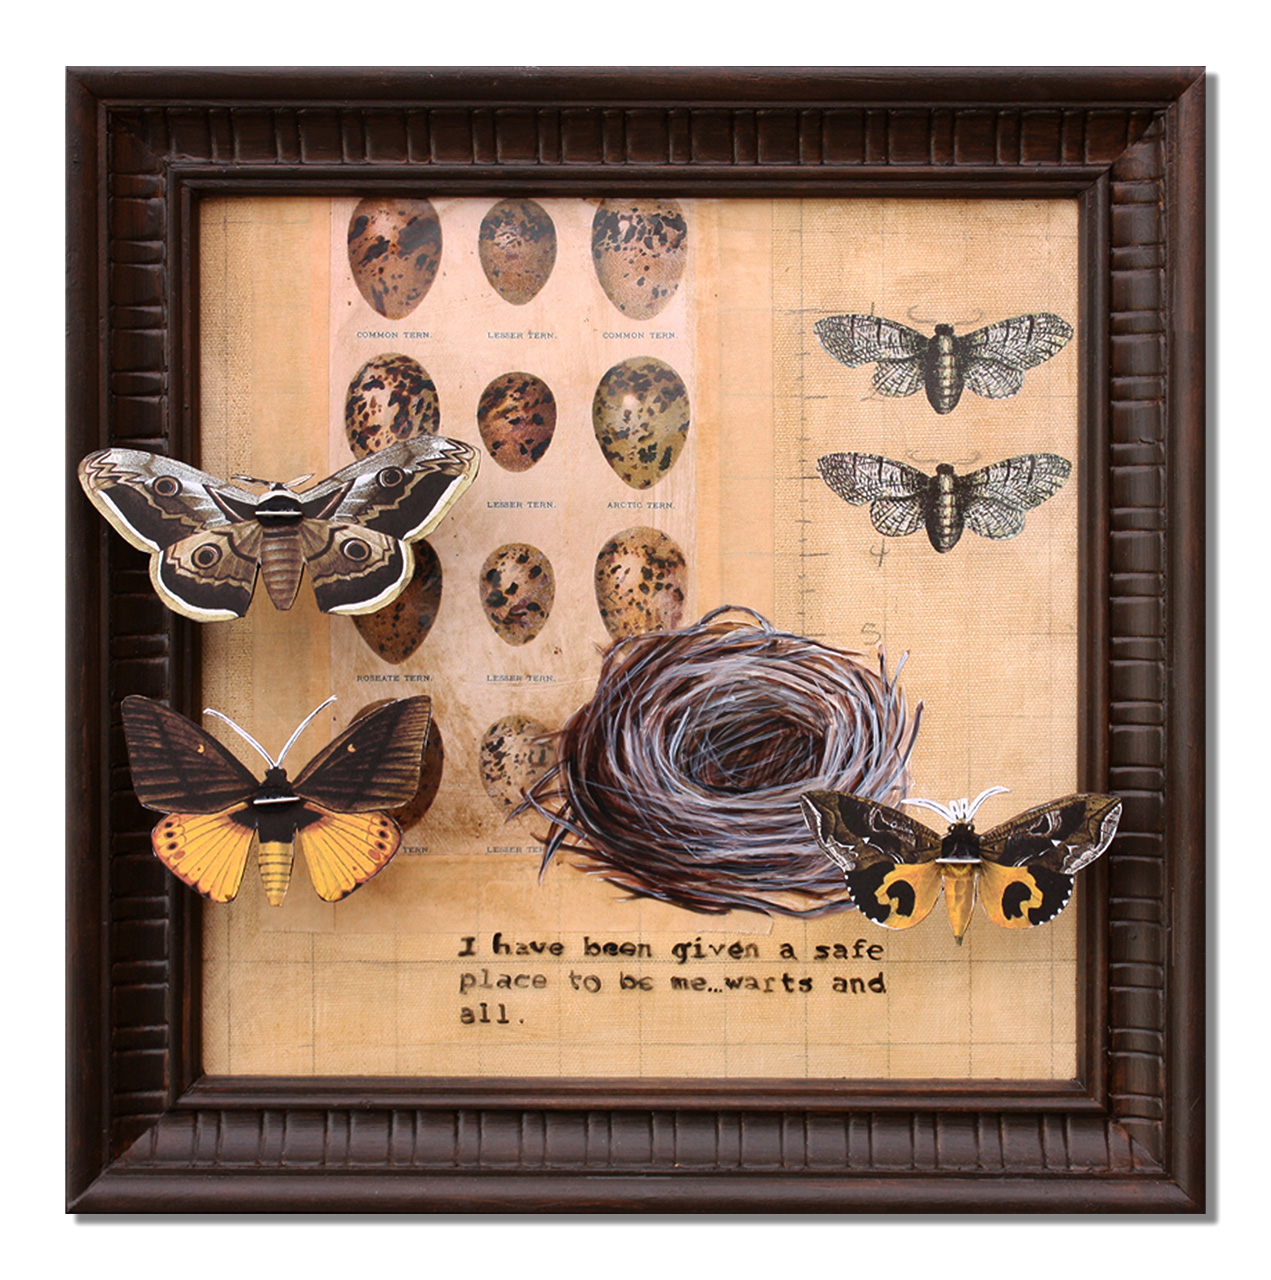 Image of 5 moths, one nest and a vintage illustration of speckled eggs.